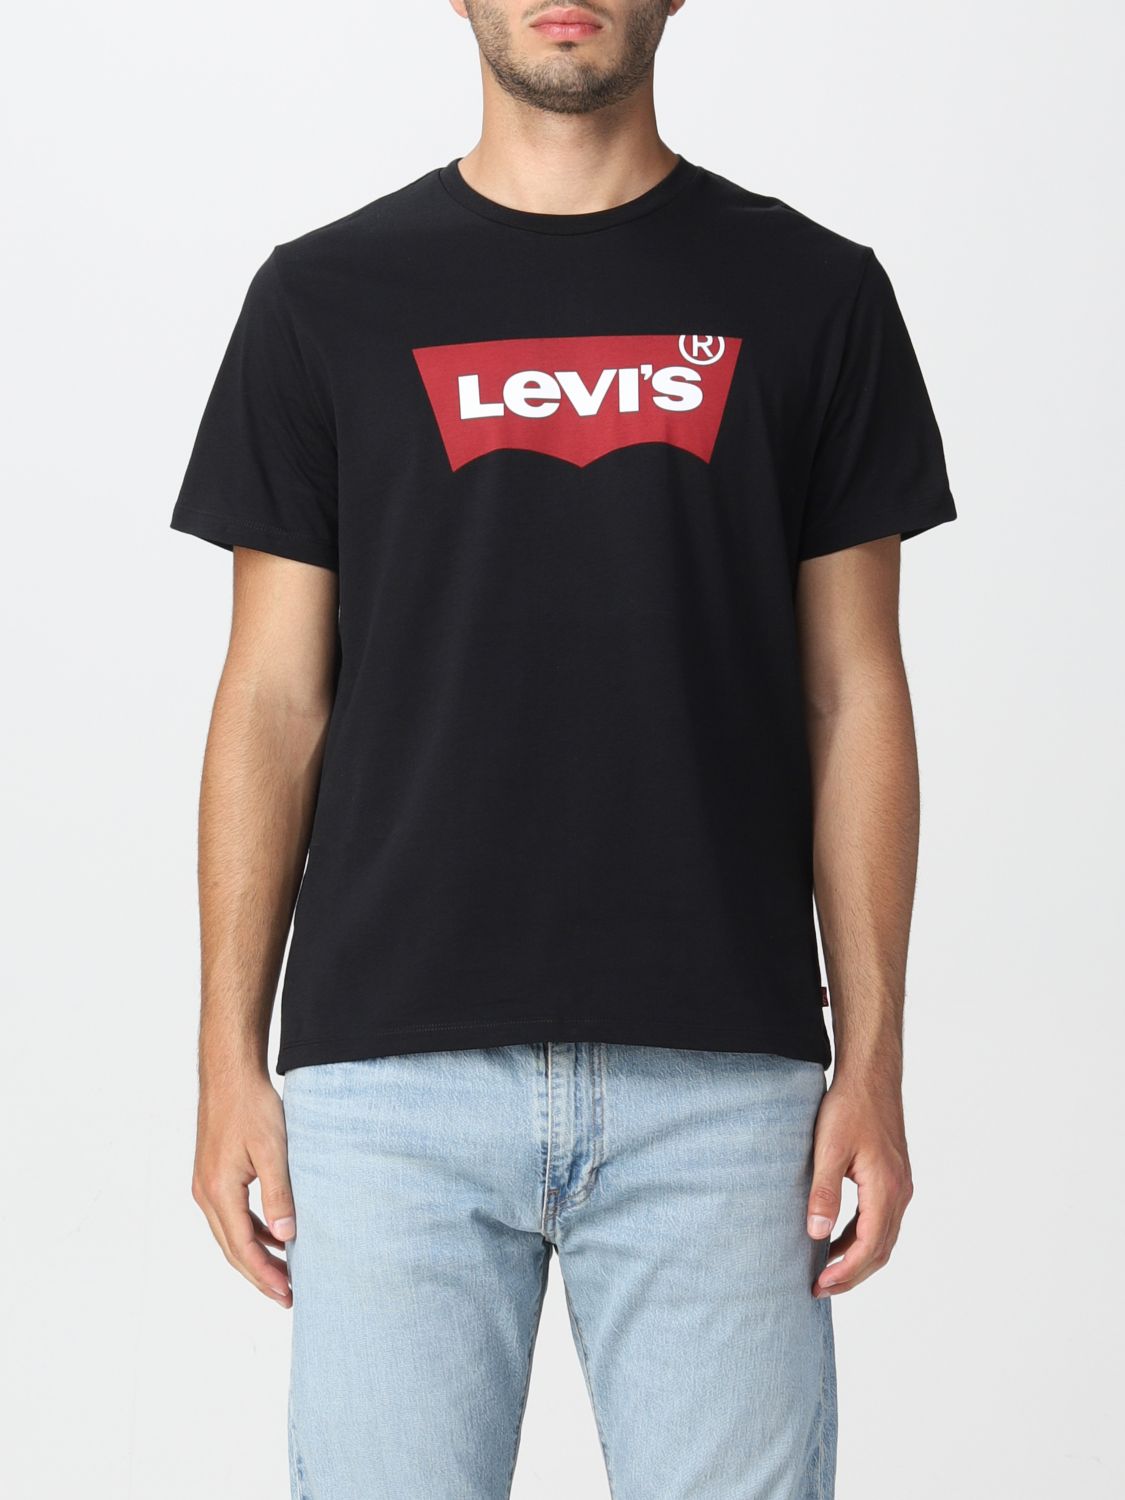 zwart Niet modieus Ambacht LEVI'S: t-shirt for man - Black | Levi's t-shirt 177830137 online on  GIGLIO.COM